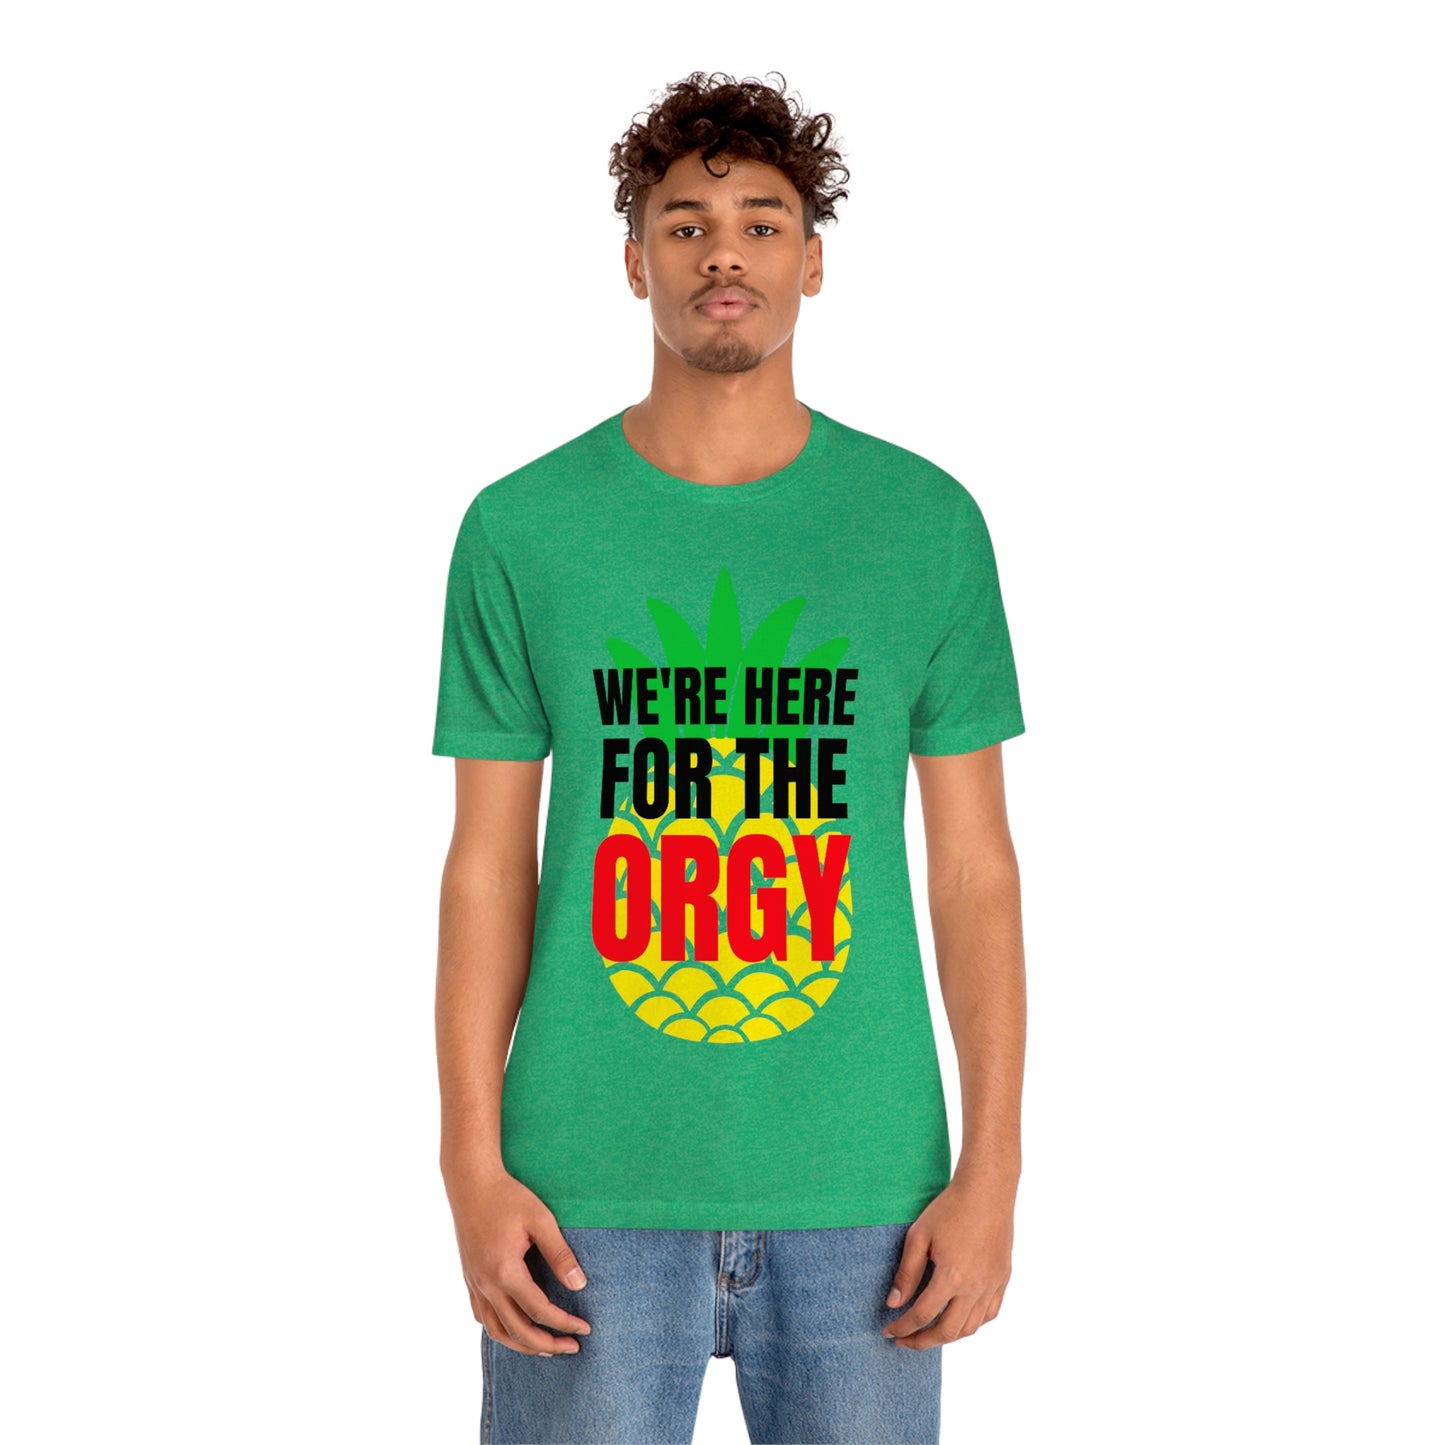 Orgy 3 - Unisex T-Shirt